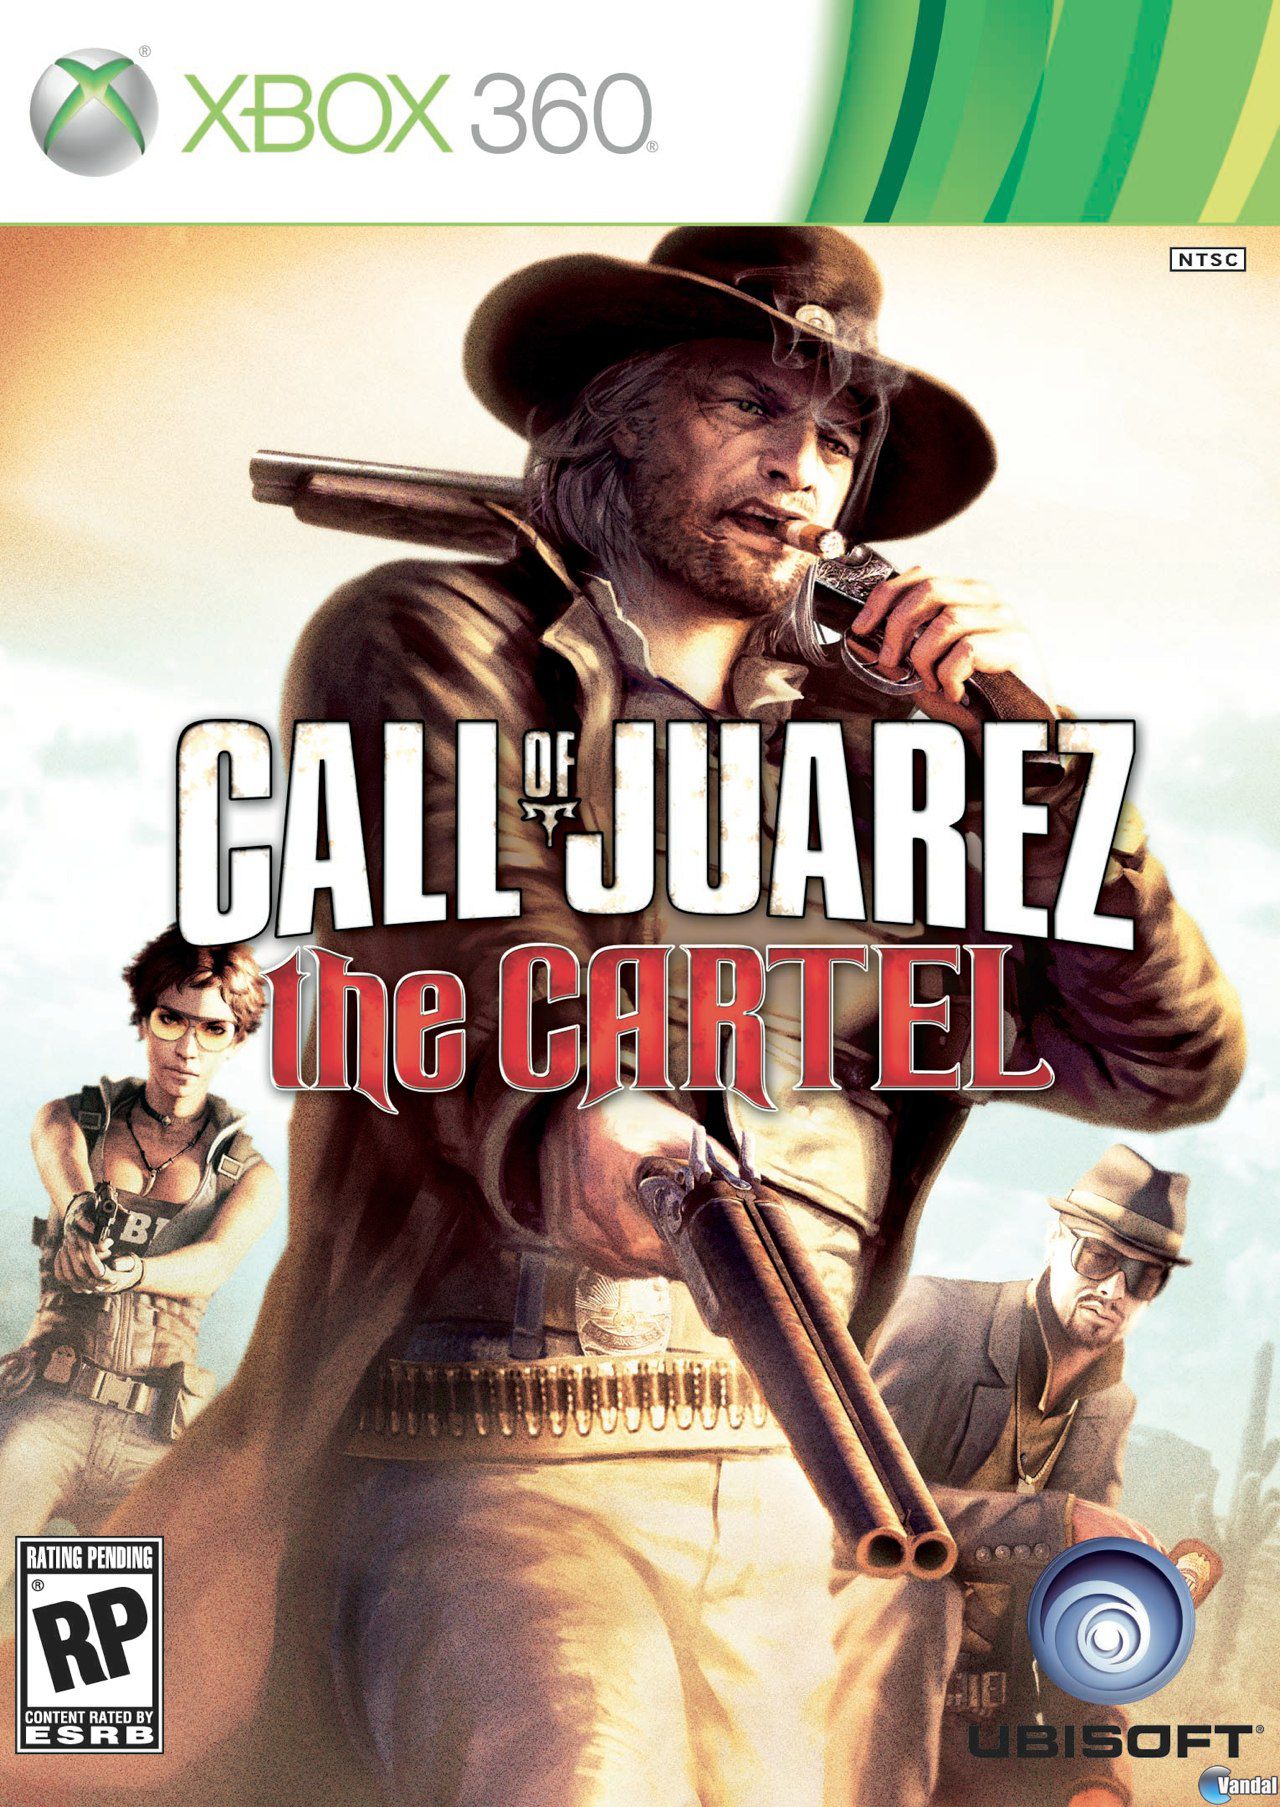 Regeneración Pertenece Anoi Call of Juarez: The Cartel - Videojuego (Xbox 360, PS3 y PC) - Vandal